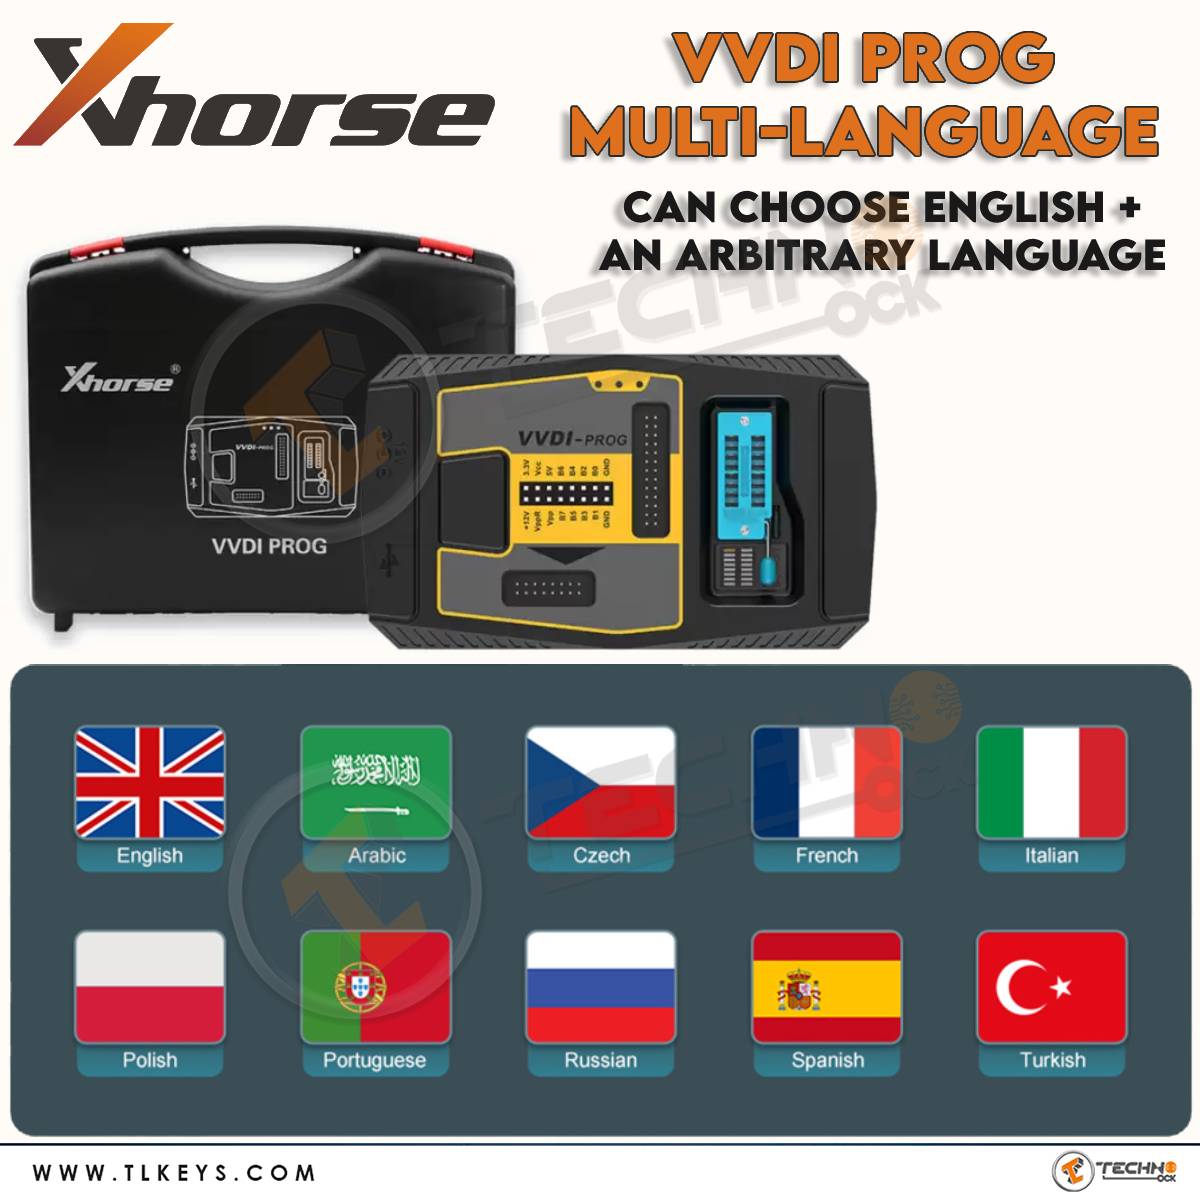  Xhorse VVDI PROG Programmer Multi-Language